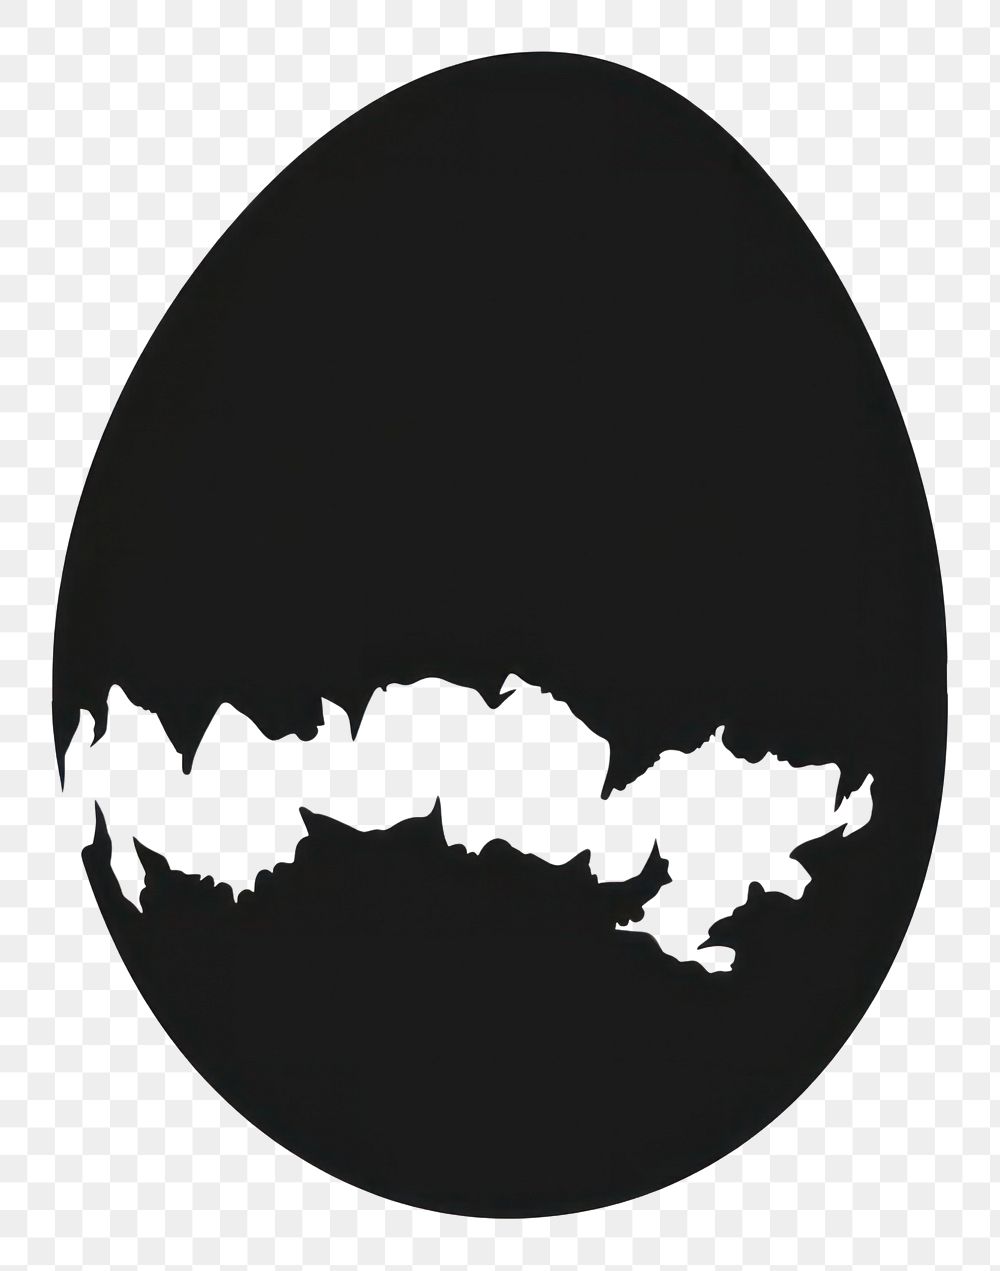 PNG Egg shell silhouette clip art white logo monochrome.